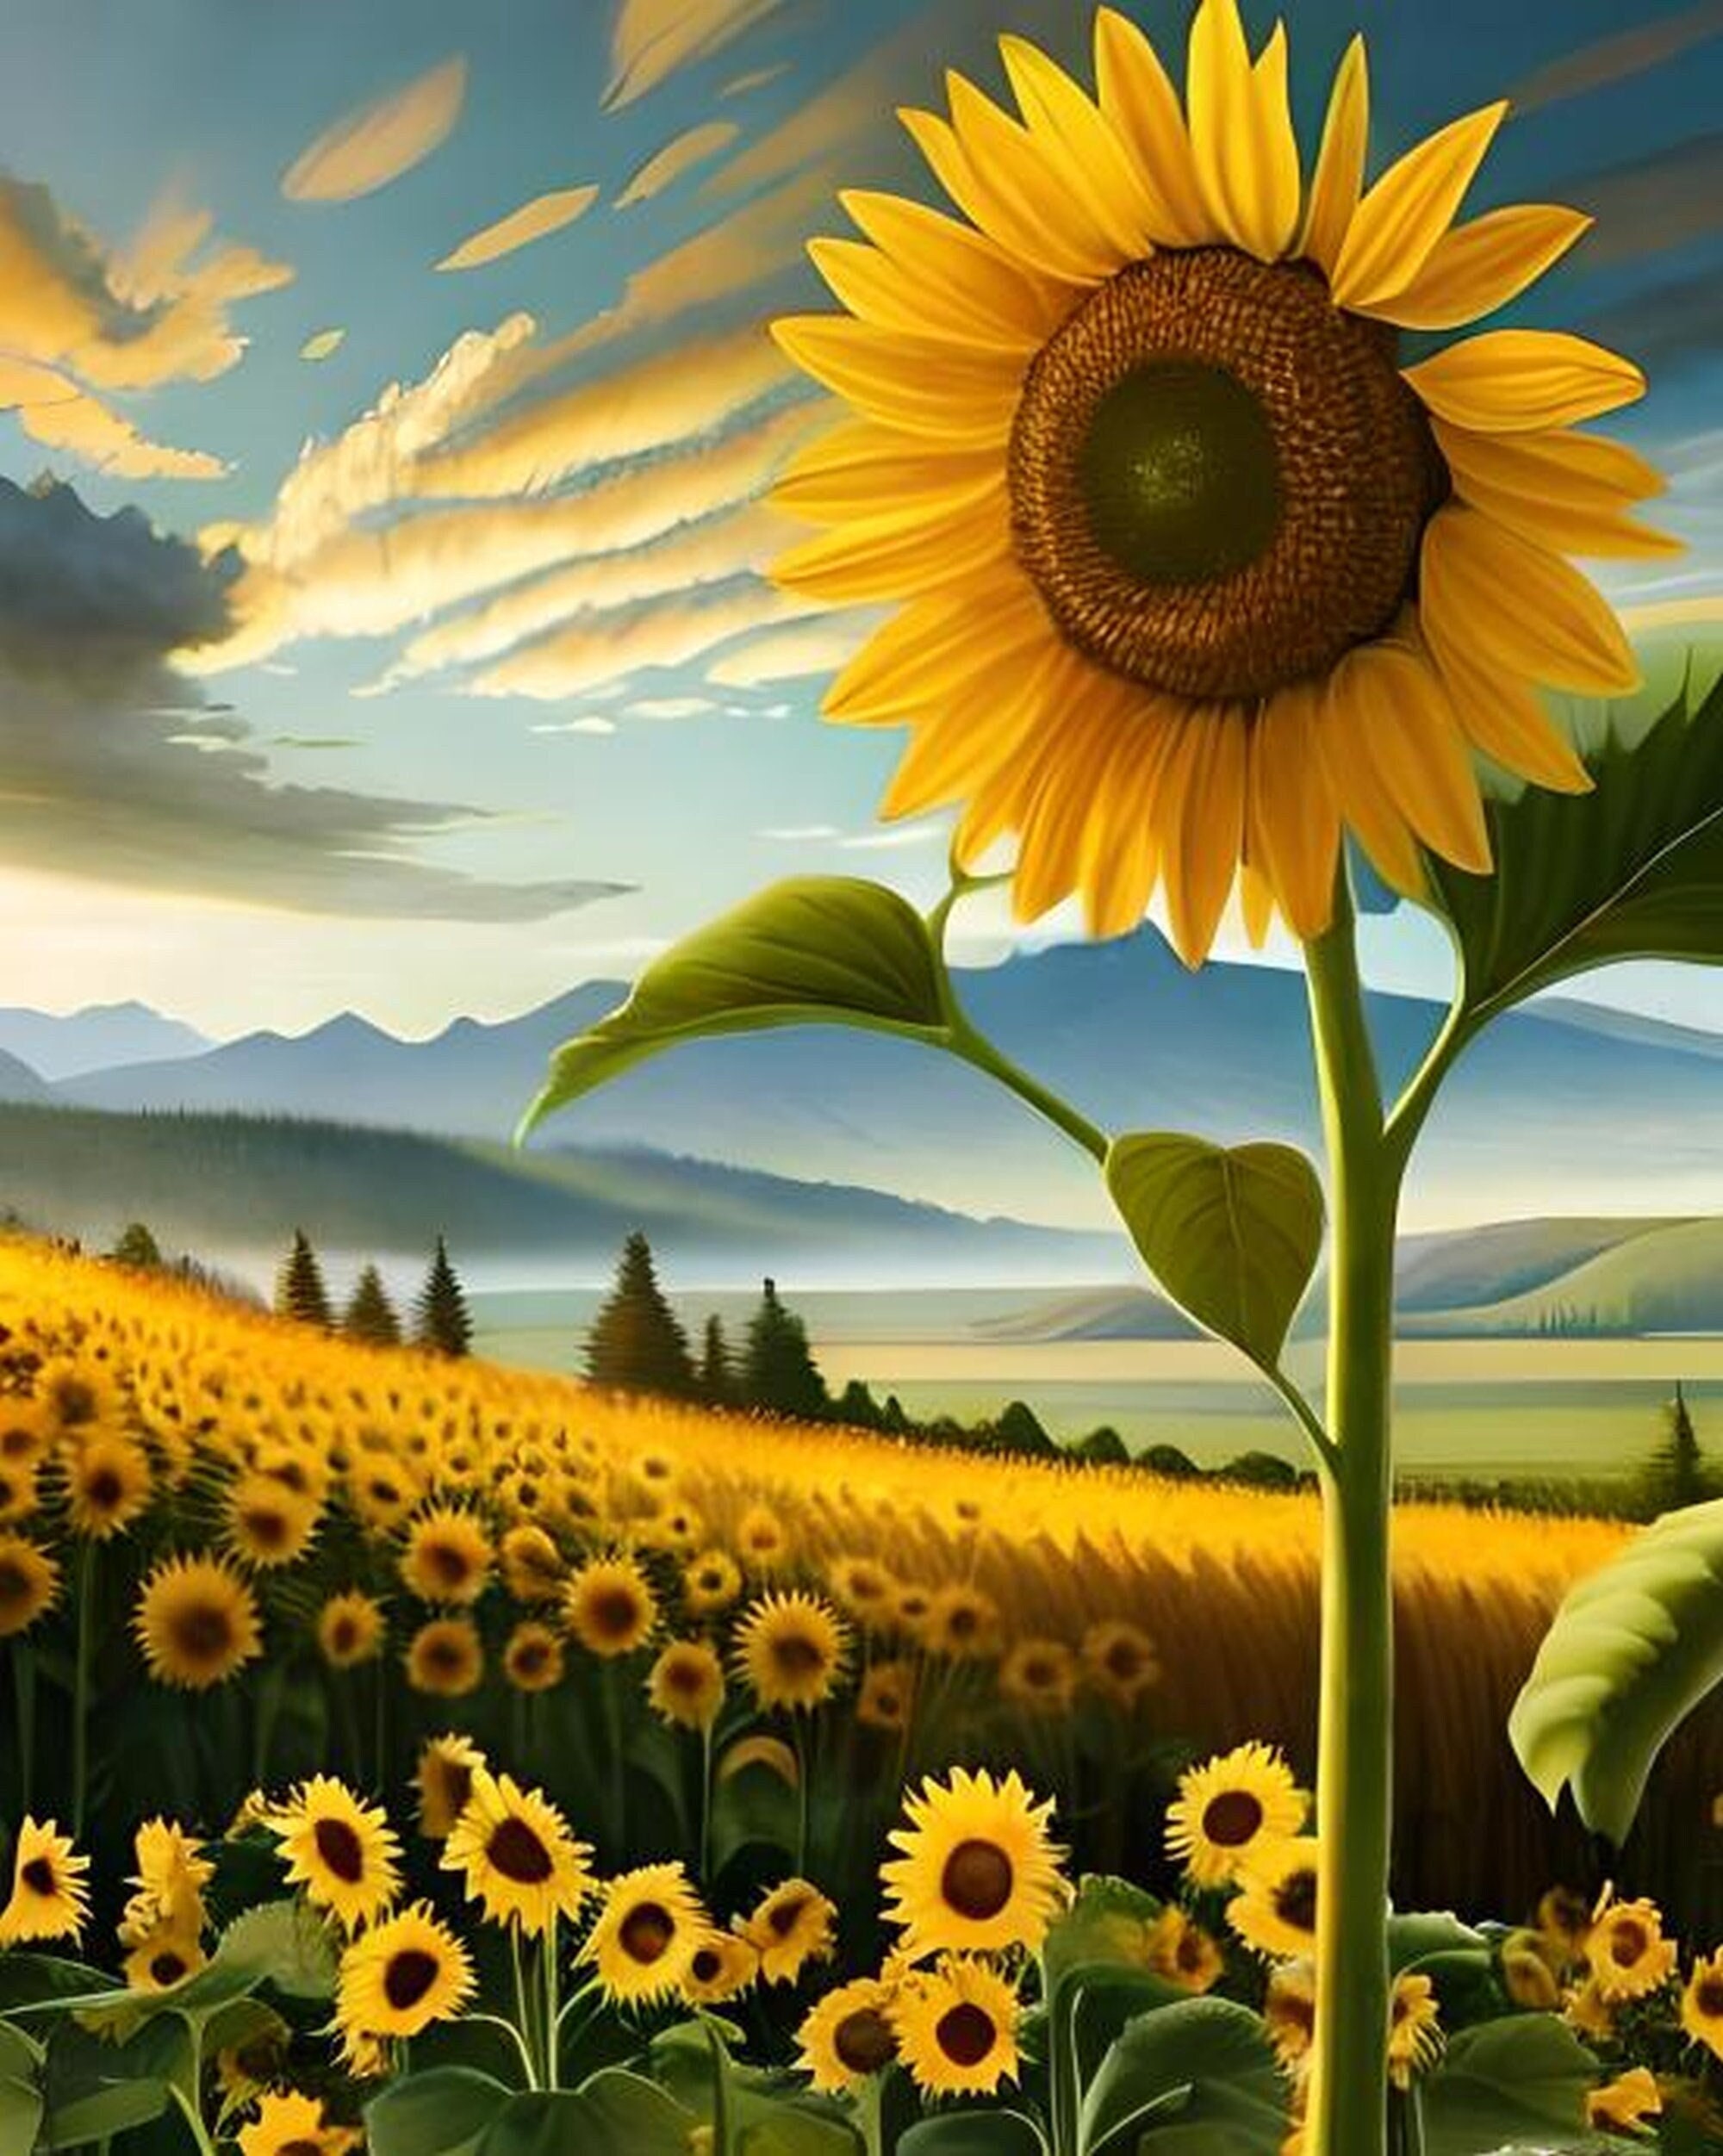 Sunflower Amongst Many - Etsy